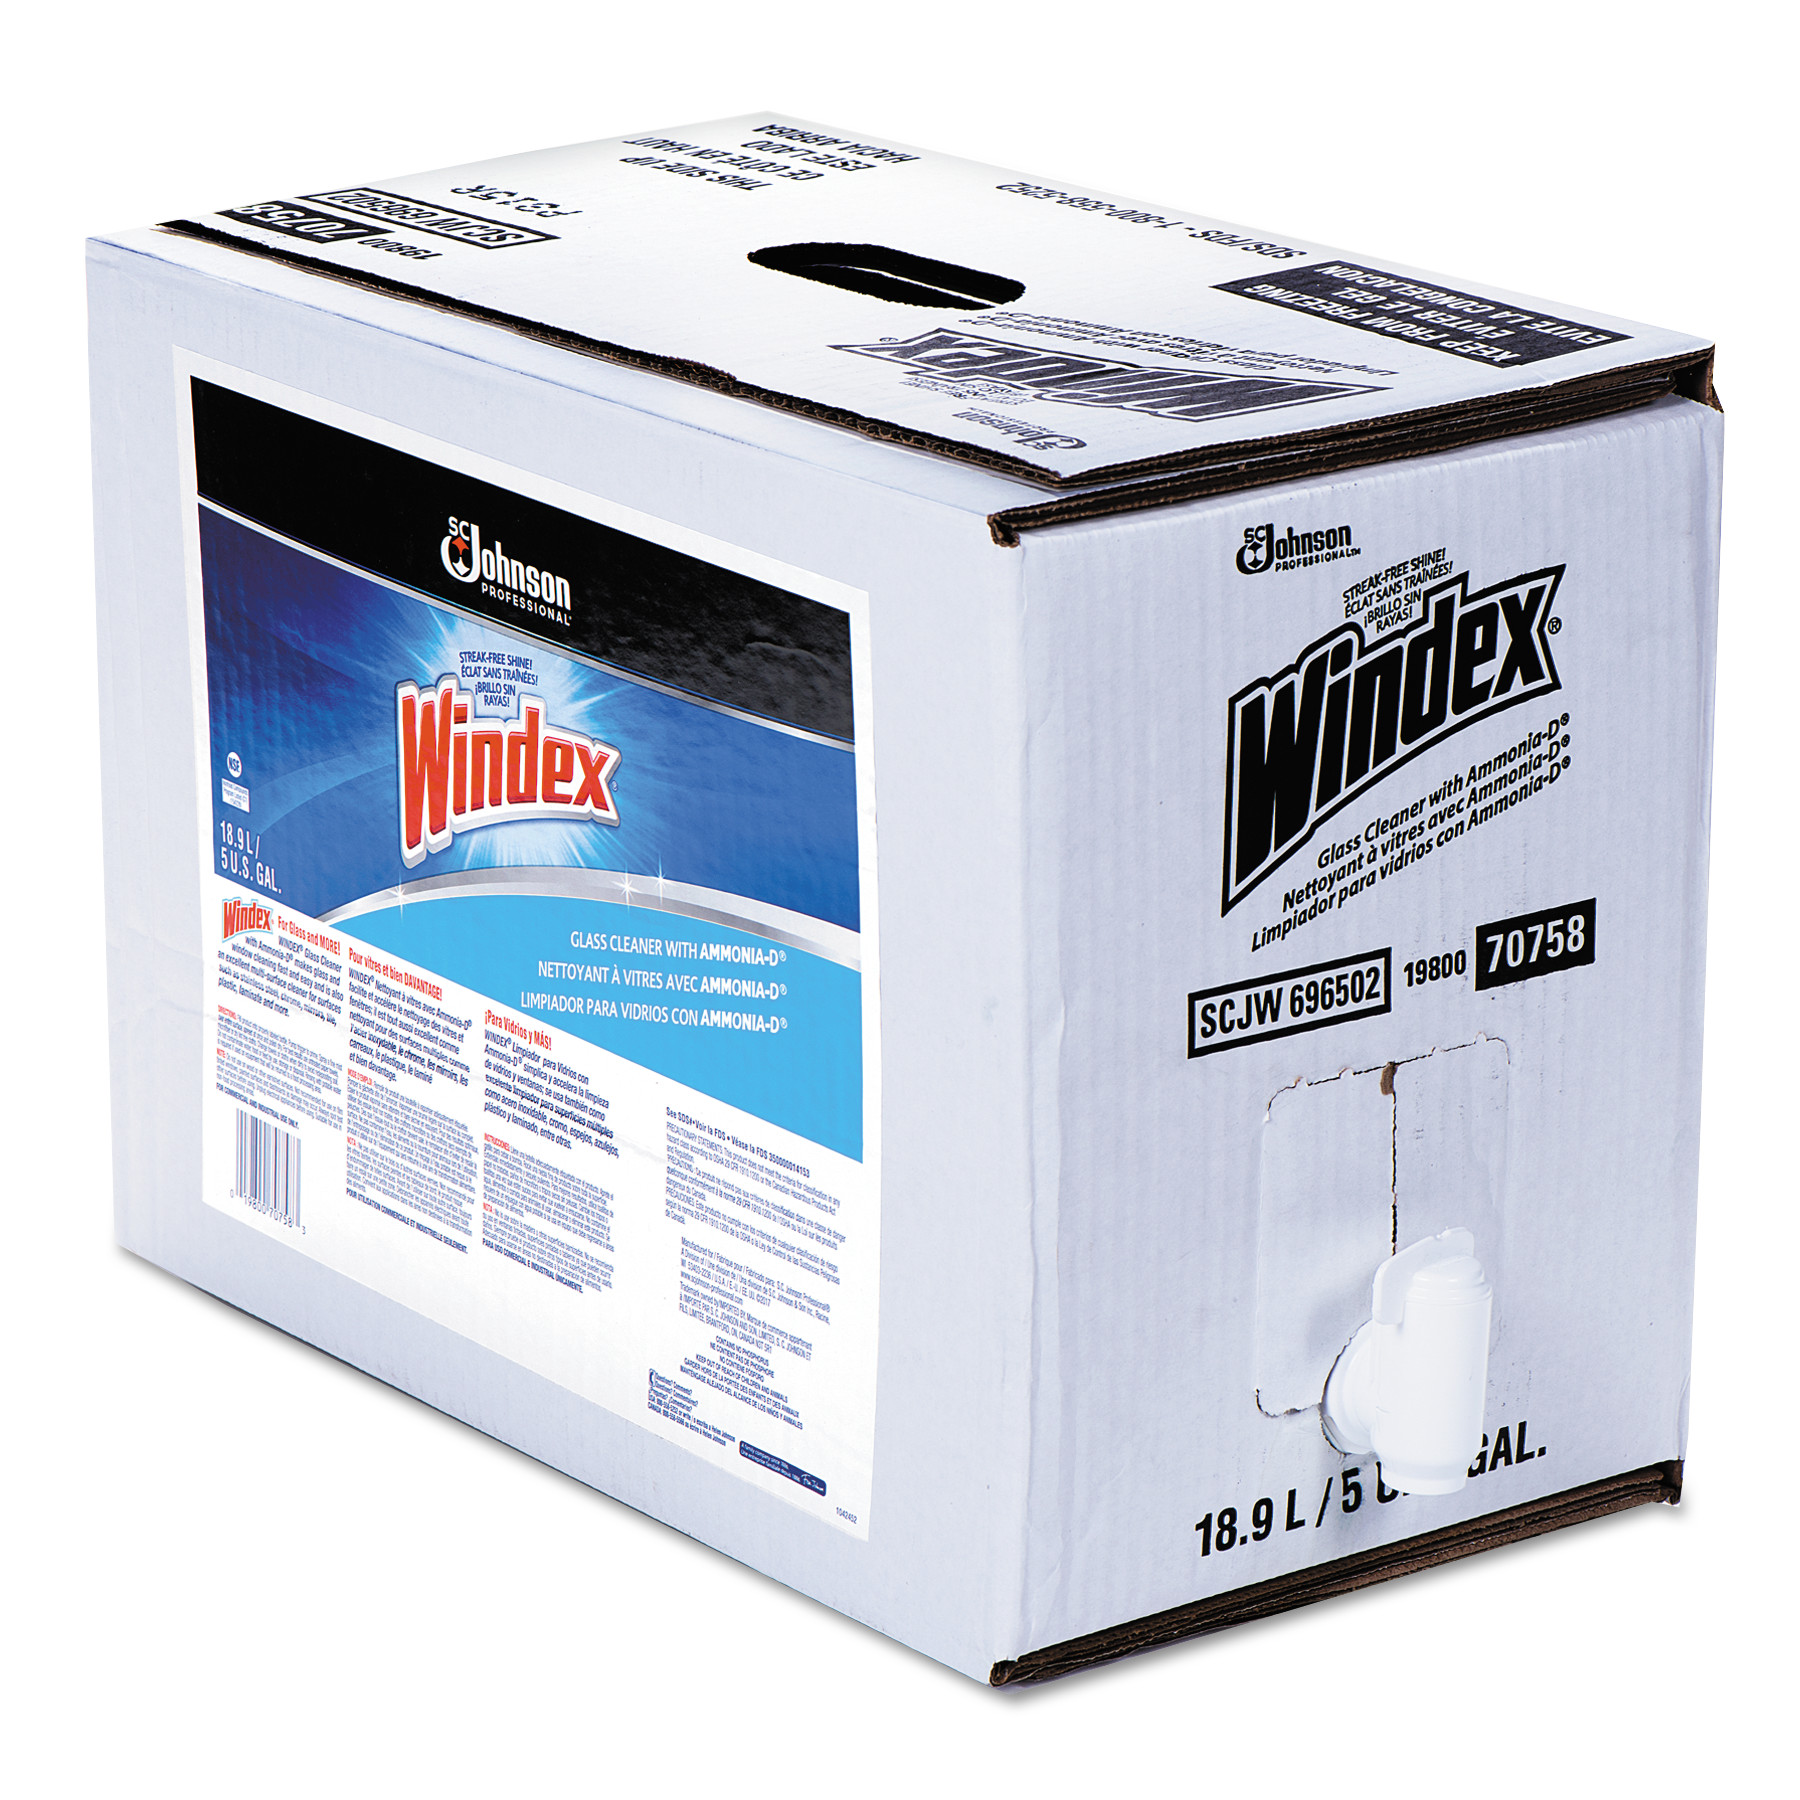  Windex 696502 Glass Cleaner with Ammonia-D, 5gal Bag-in-Box Dispenser (SJN696502) 